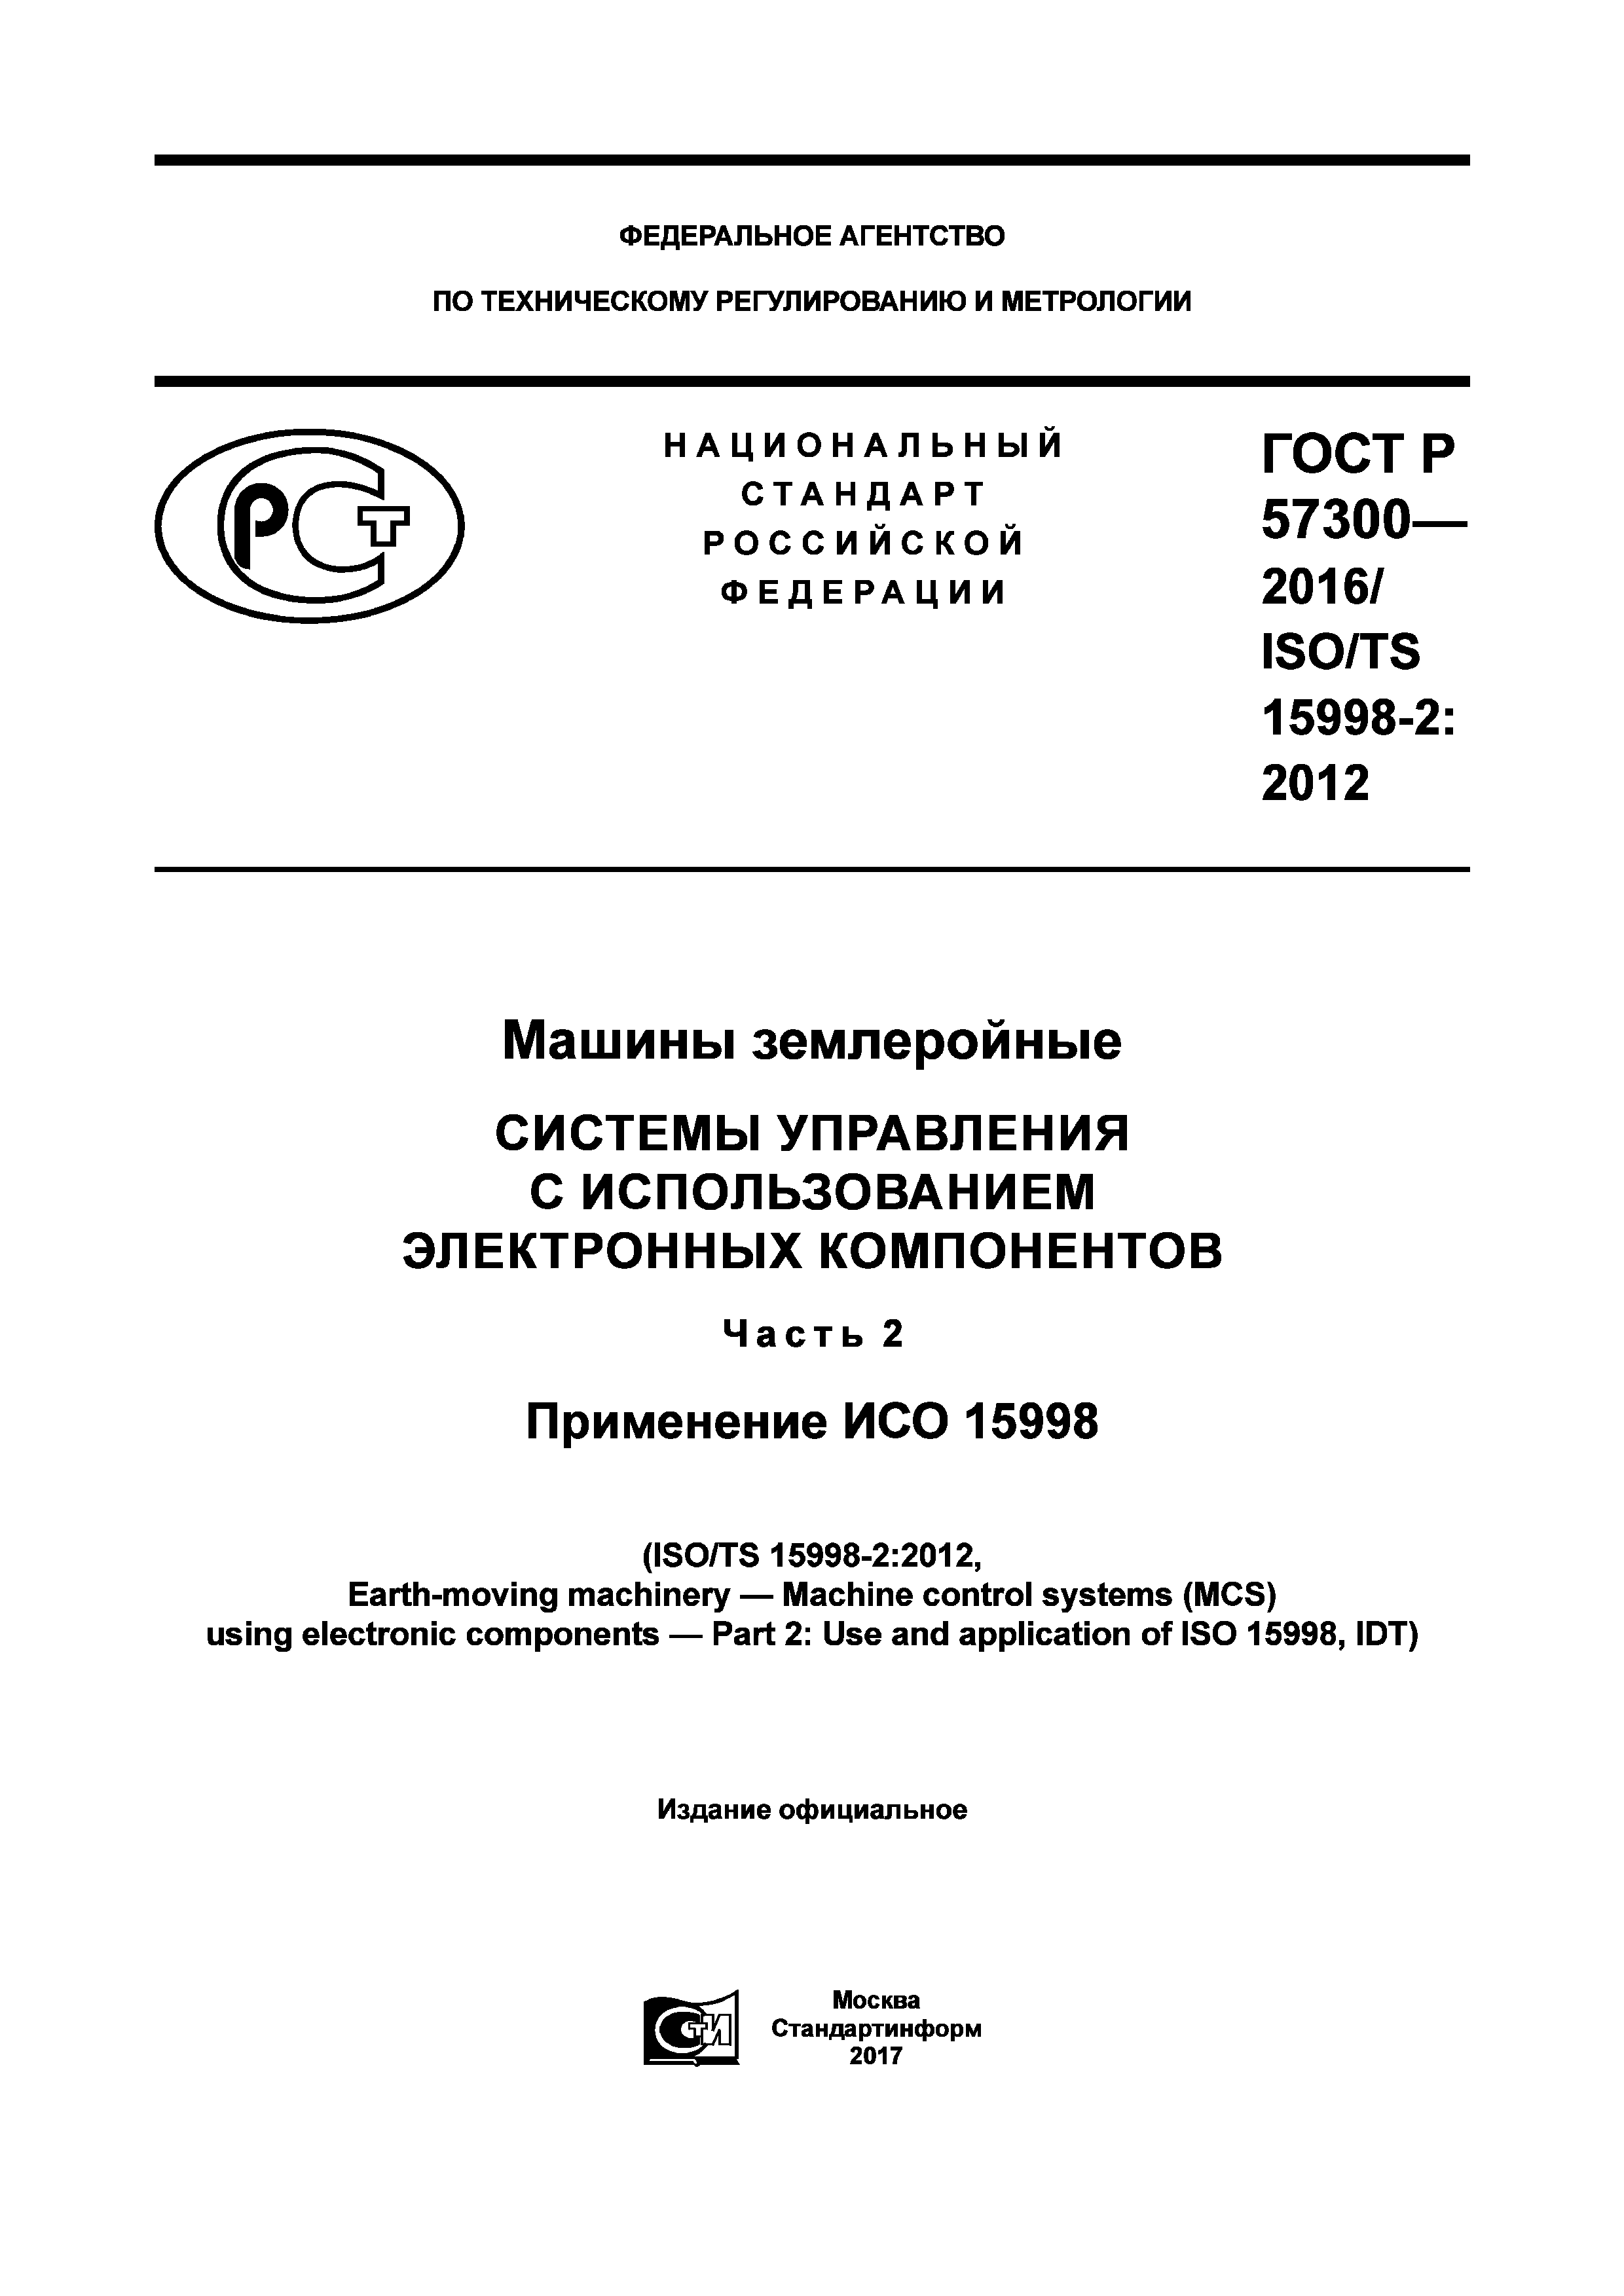 ГОСТ Р 57300-2016